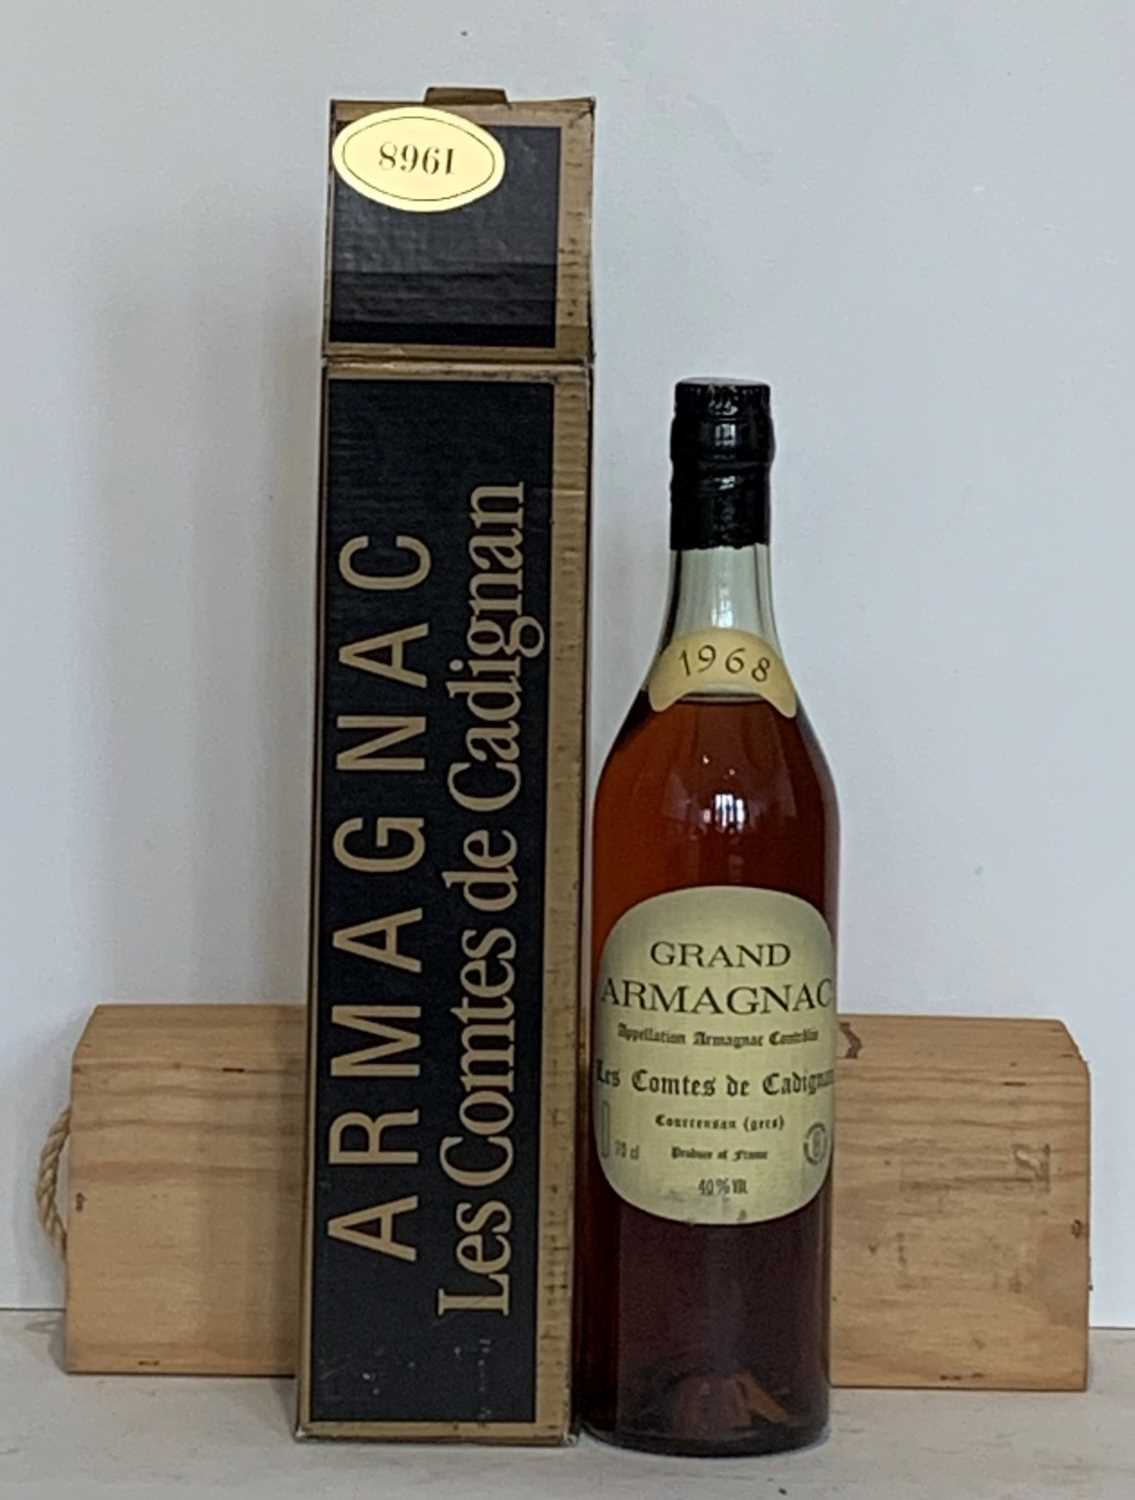 Lot 41 - 1 Bottle in original presentation carton 1968 Vintage Grand Armagnac ‘Les Comtes de Cadignan’